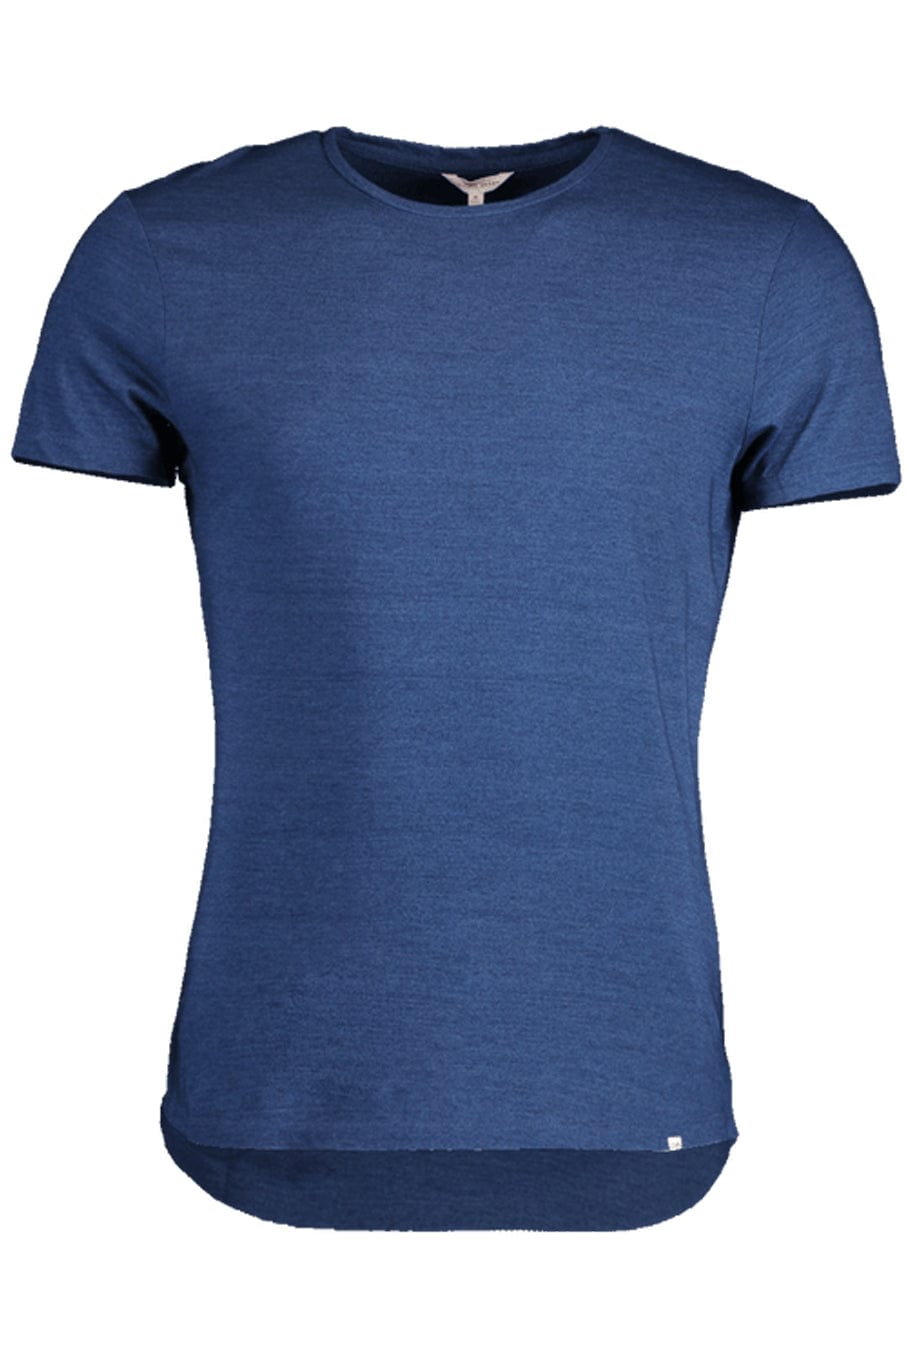 OB-T Cotton T-Shirt MENSCLOTHINGSHIRT ORLEBAR BROWN   